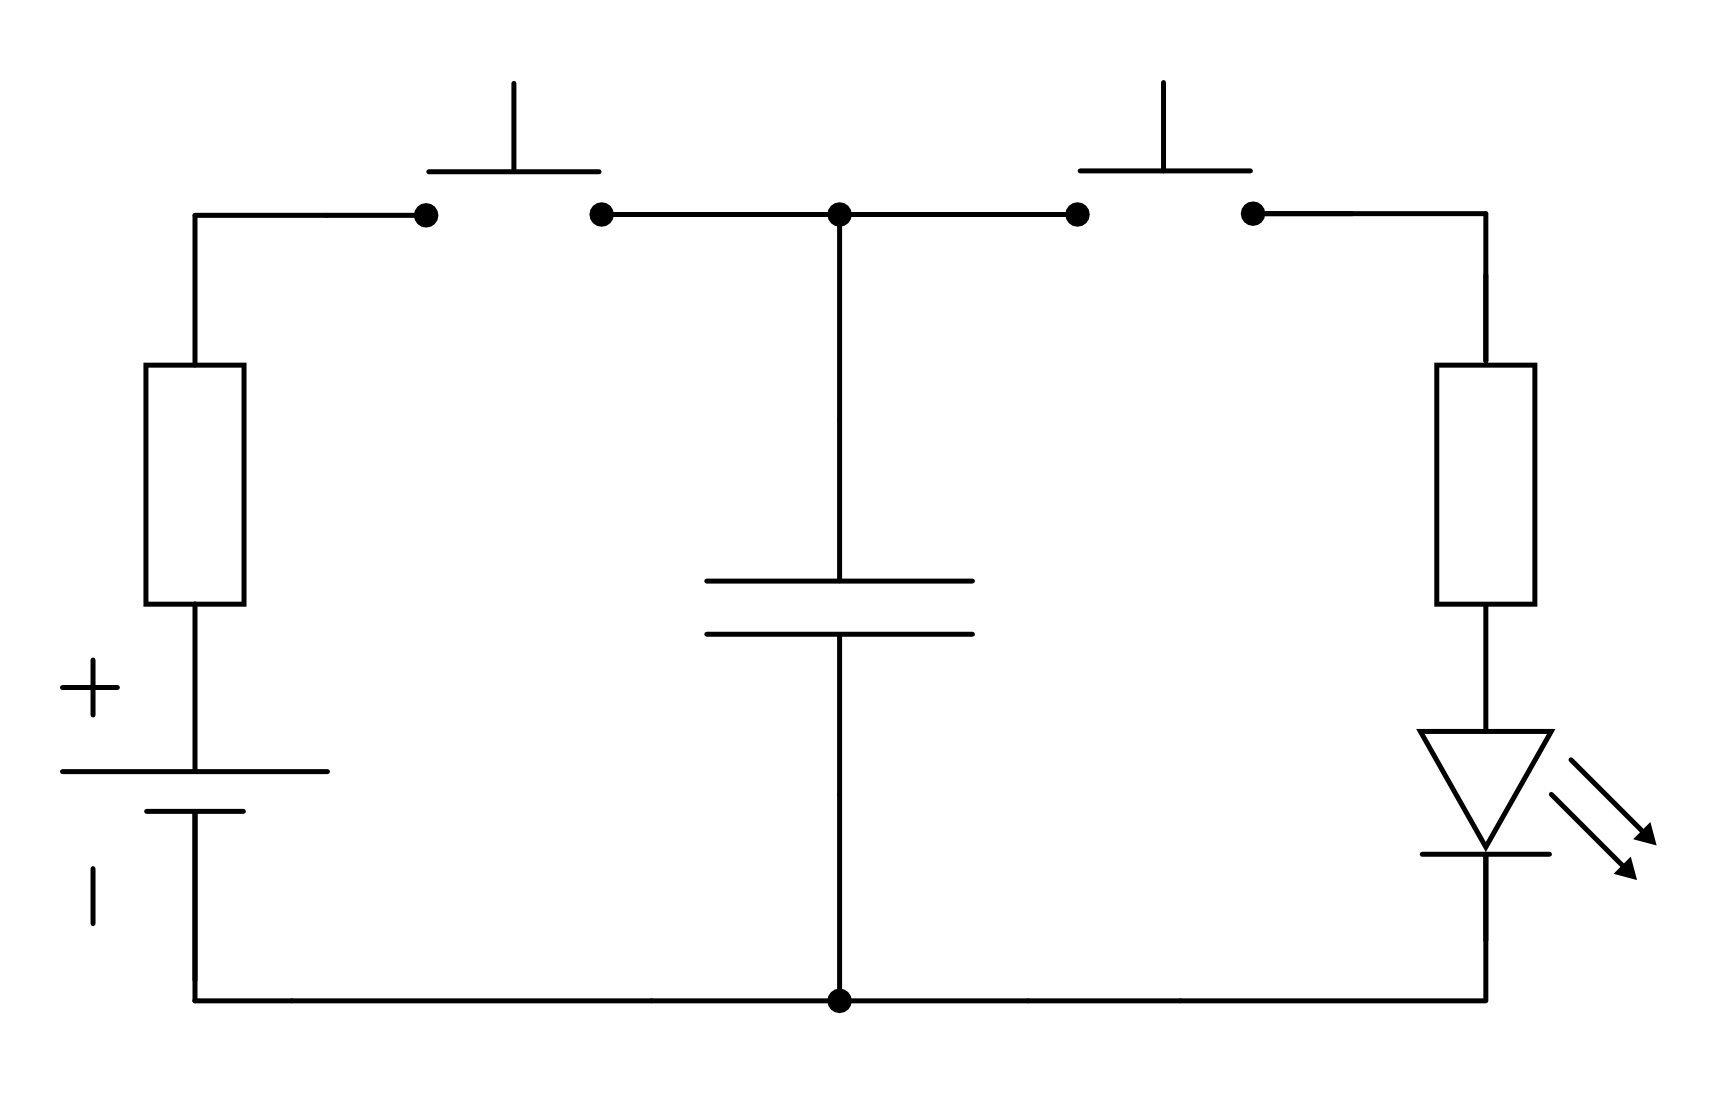 fig-kondensator-grundfunktion